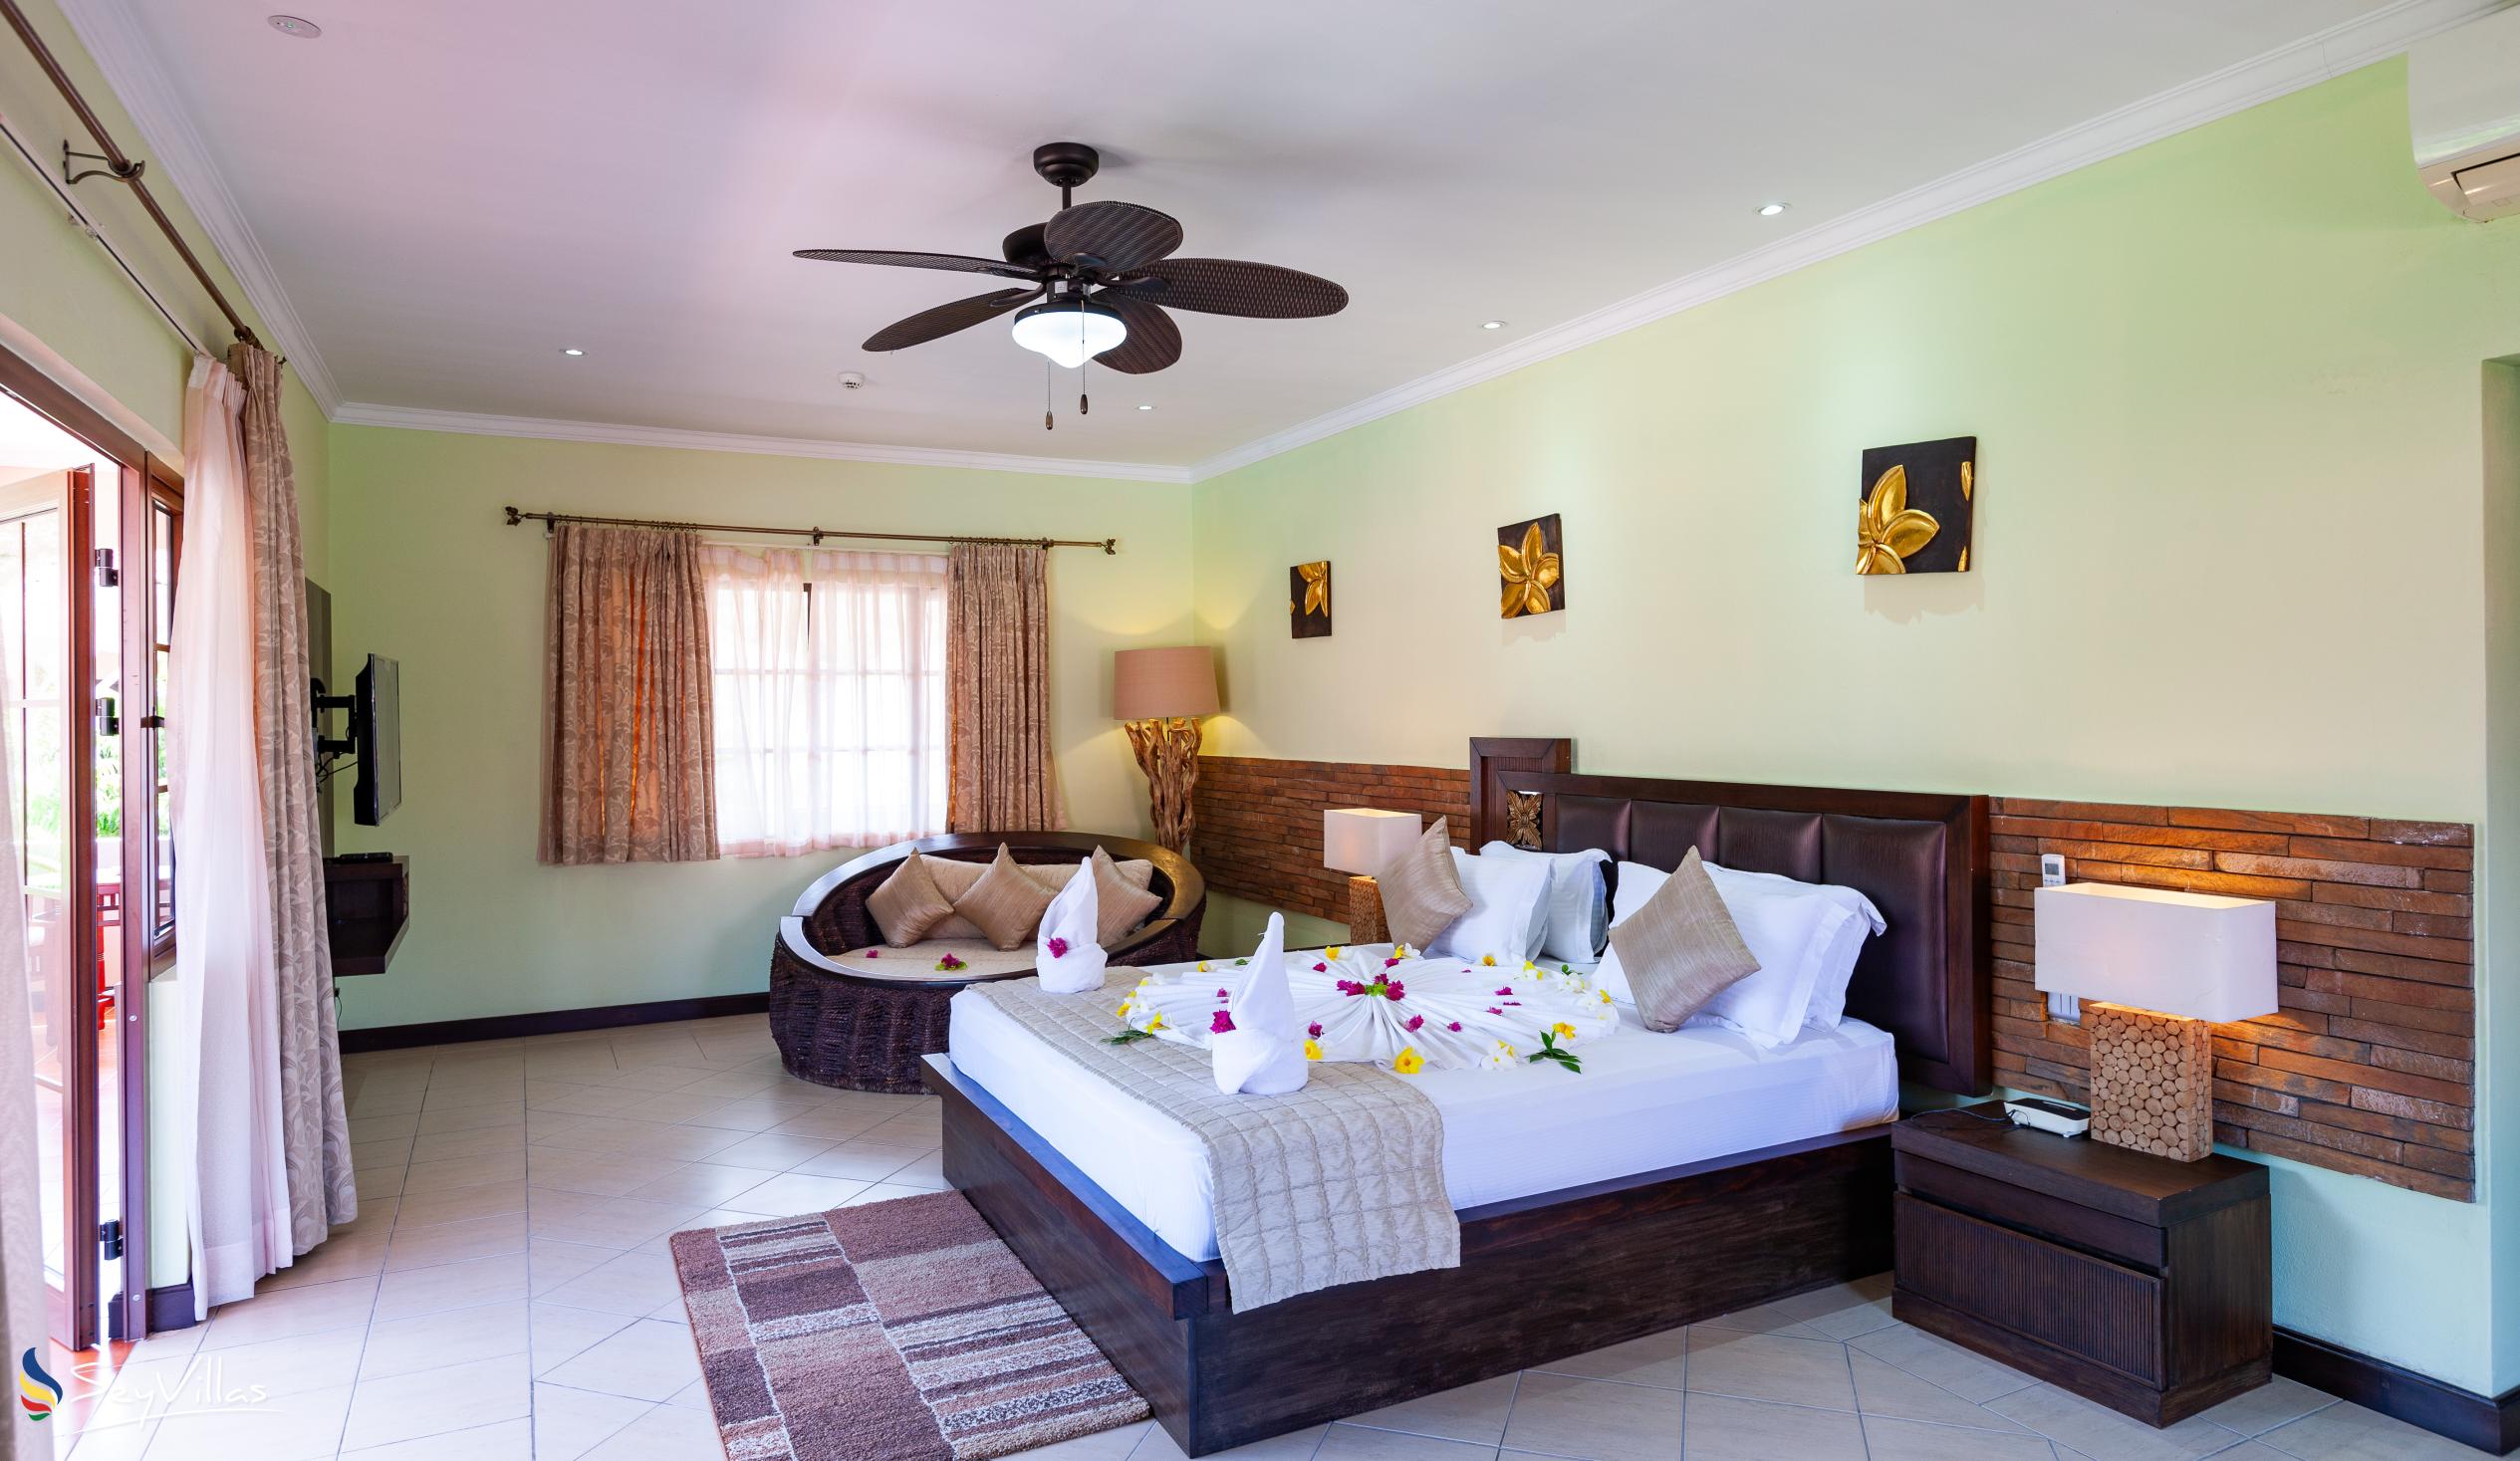 Photo 62: Oasis Hotel, Restaurant & Spa - Deluxe Room - Praslin (Seychelles)